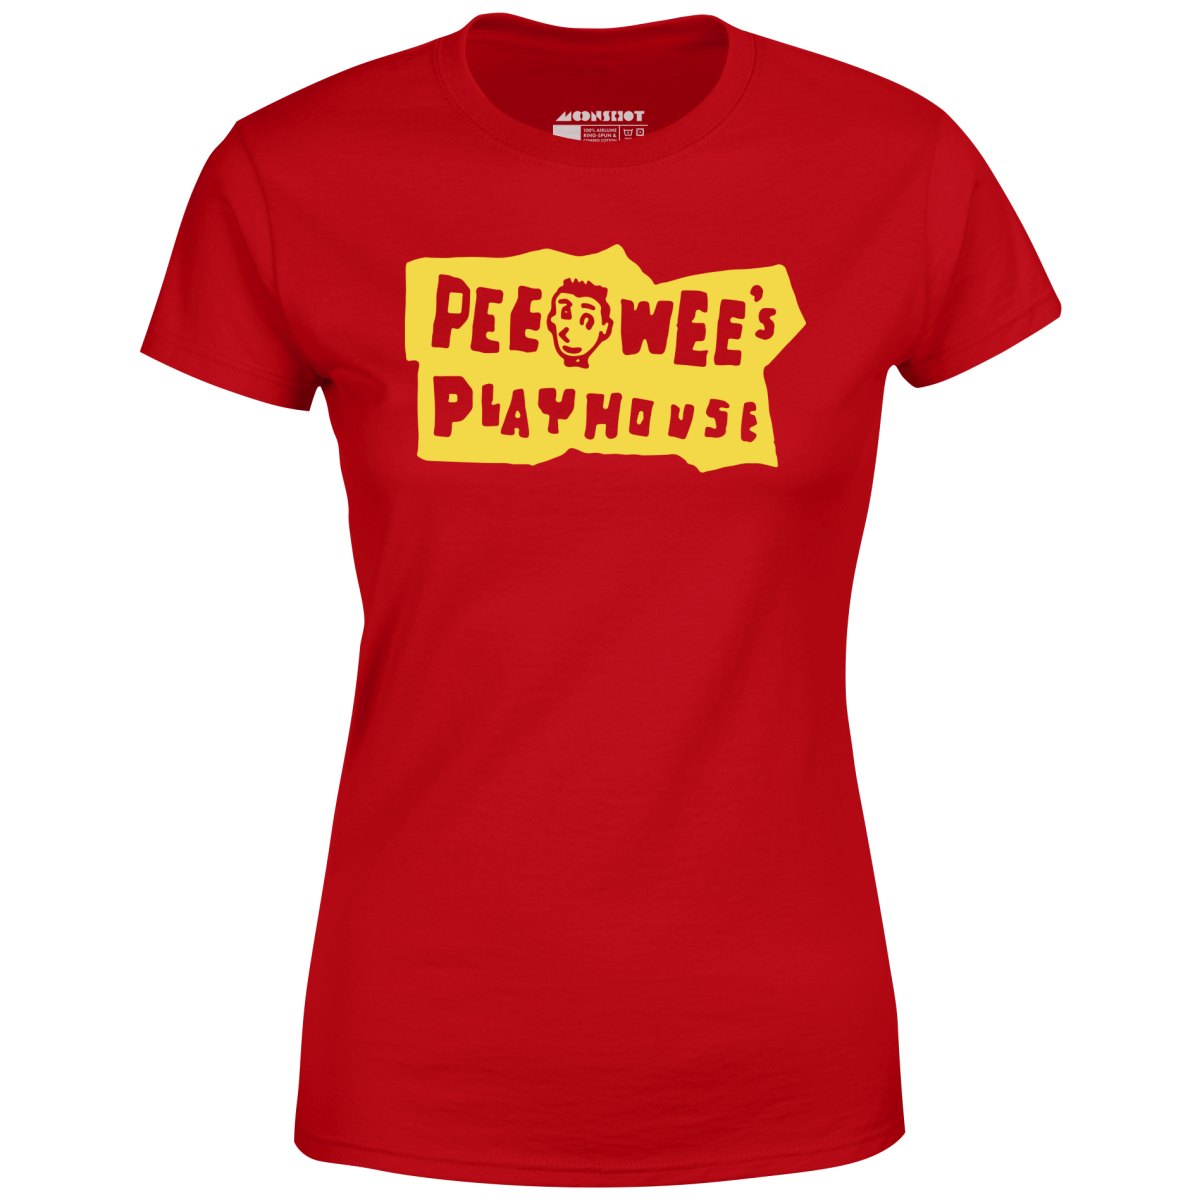 Pee Wee's Playhouse - Women's T-Shirt